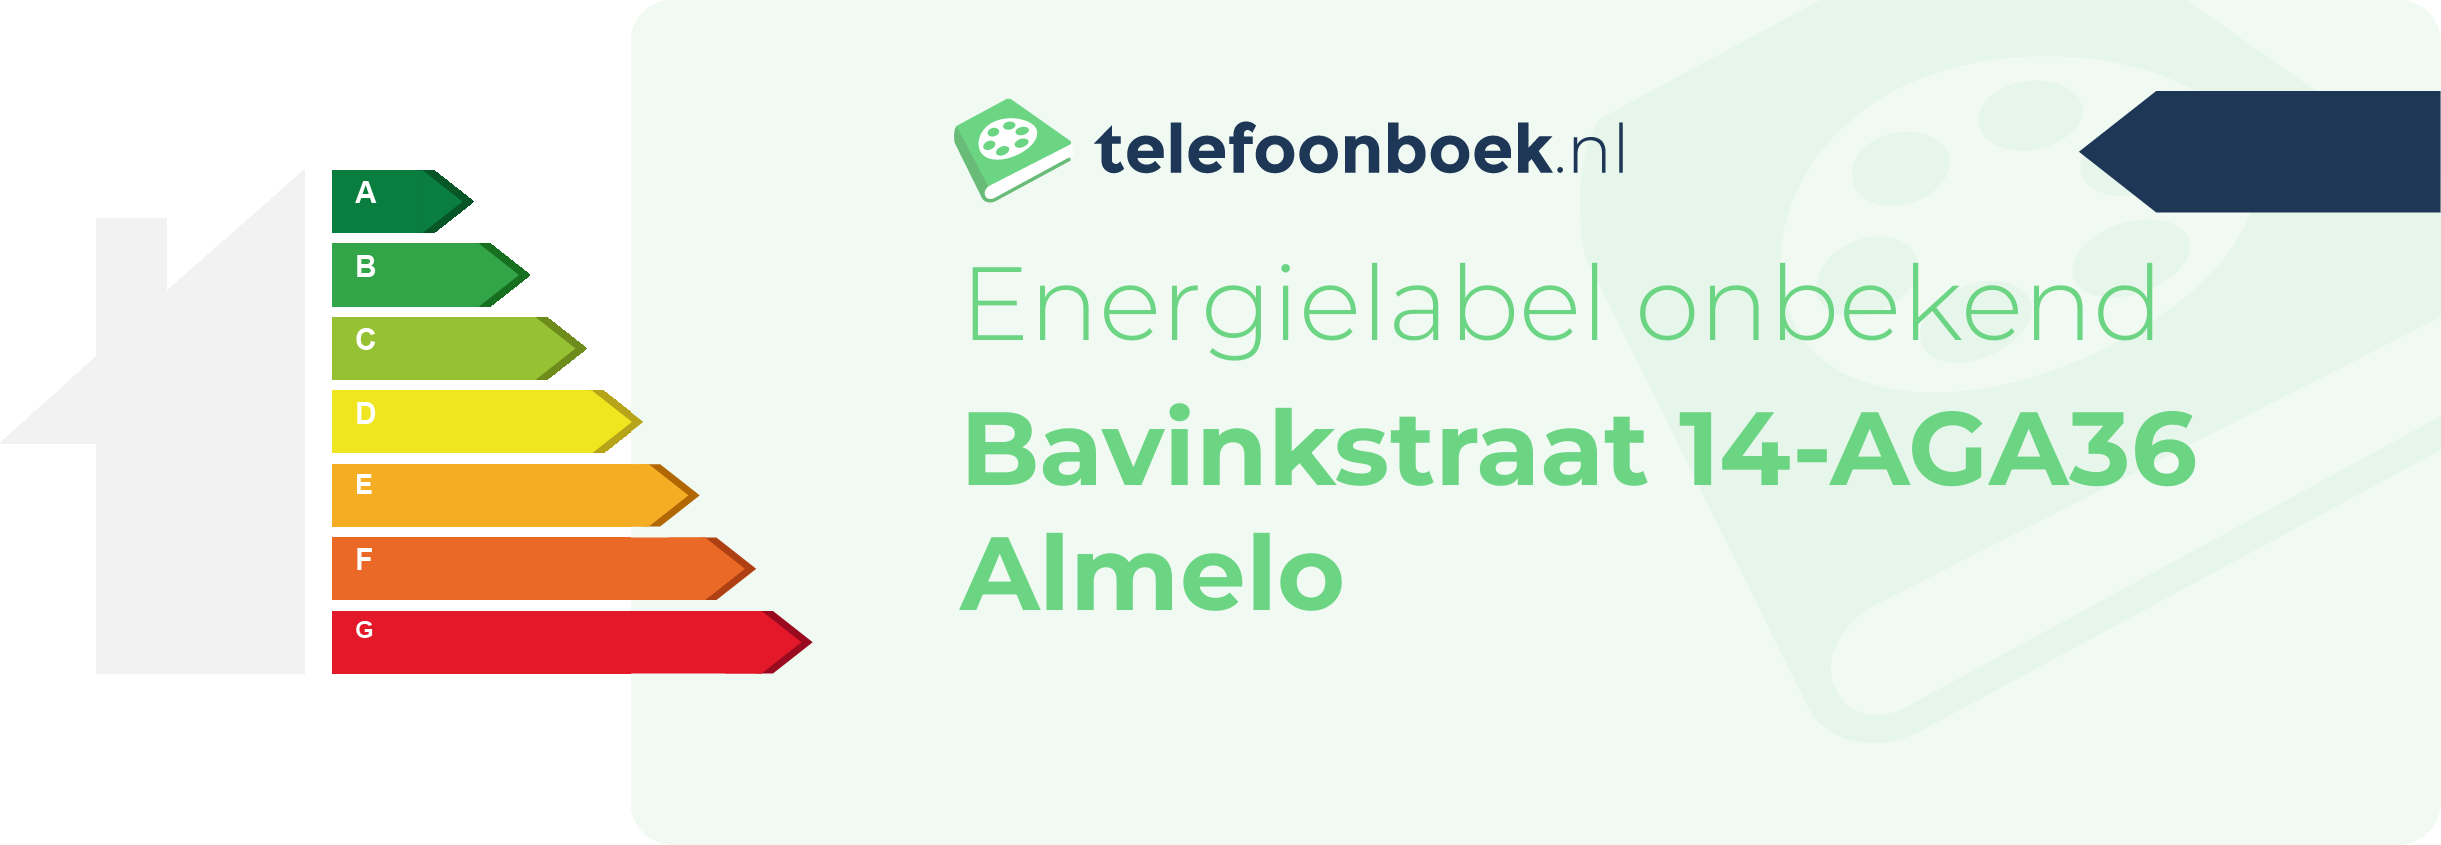 Energielabel Bavinkstraat 14-AGA36 Almelo